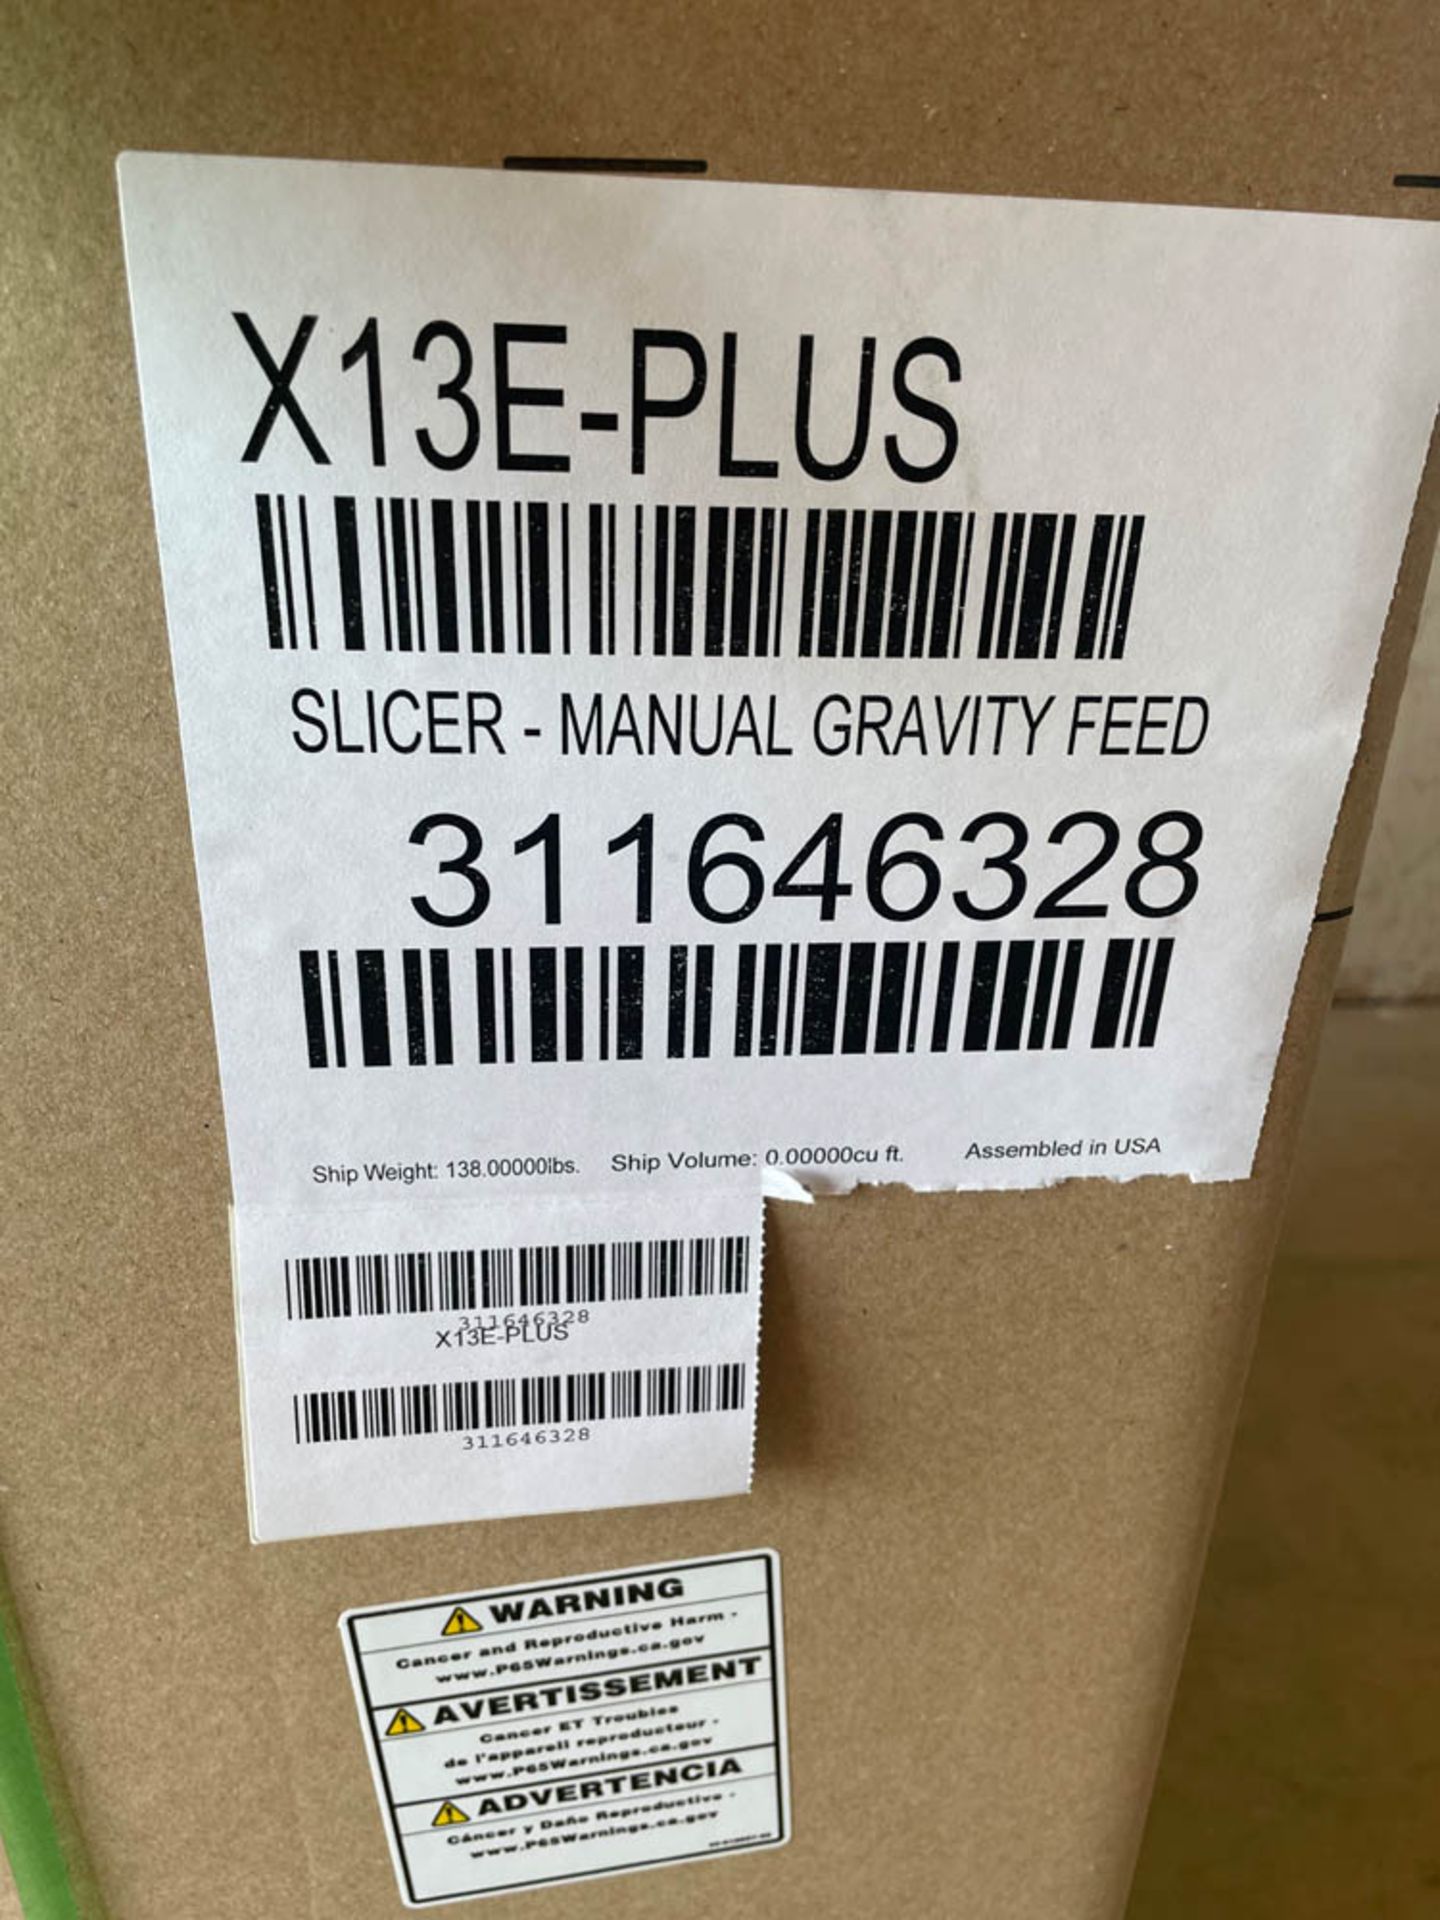 BERKEL X13E-Plus Slicer-Manual Gravity Feed - Image 4 of 7